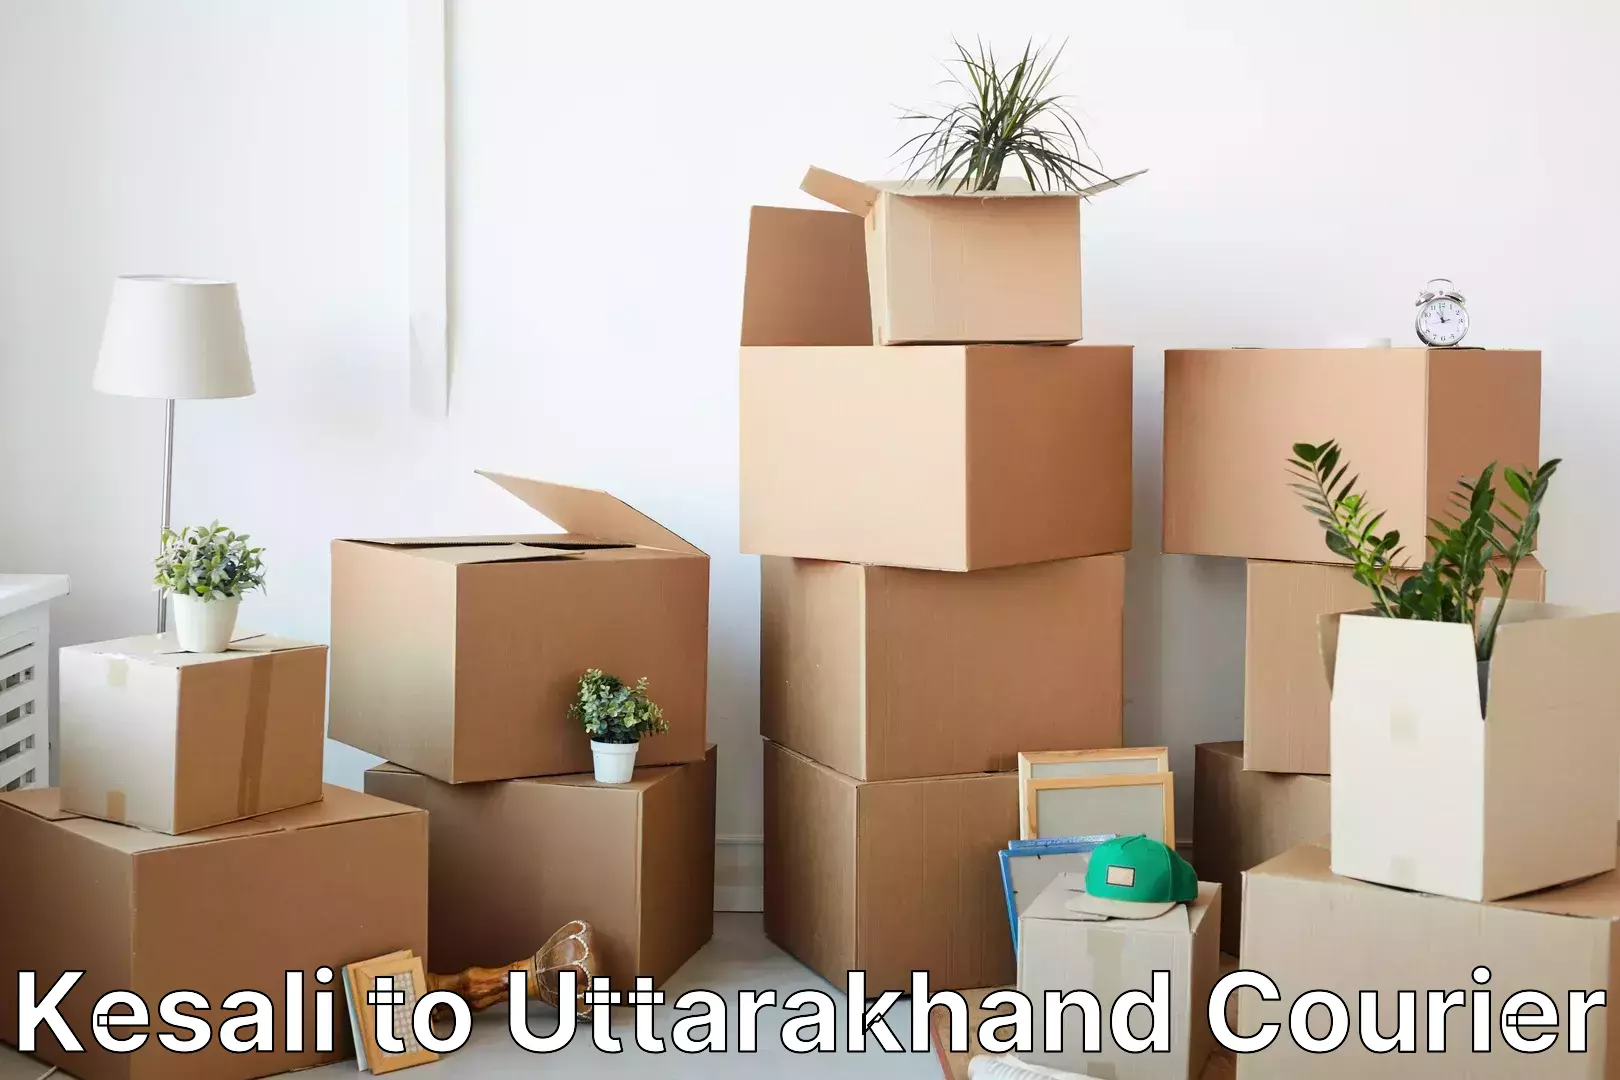 Personalized courier experiences Kesali to Uttarakhand